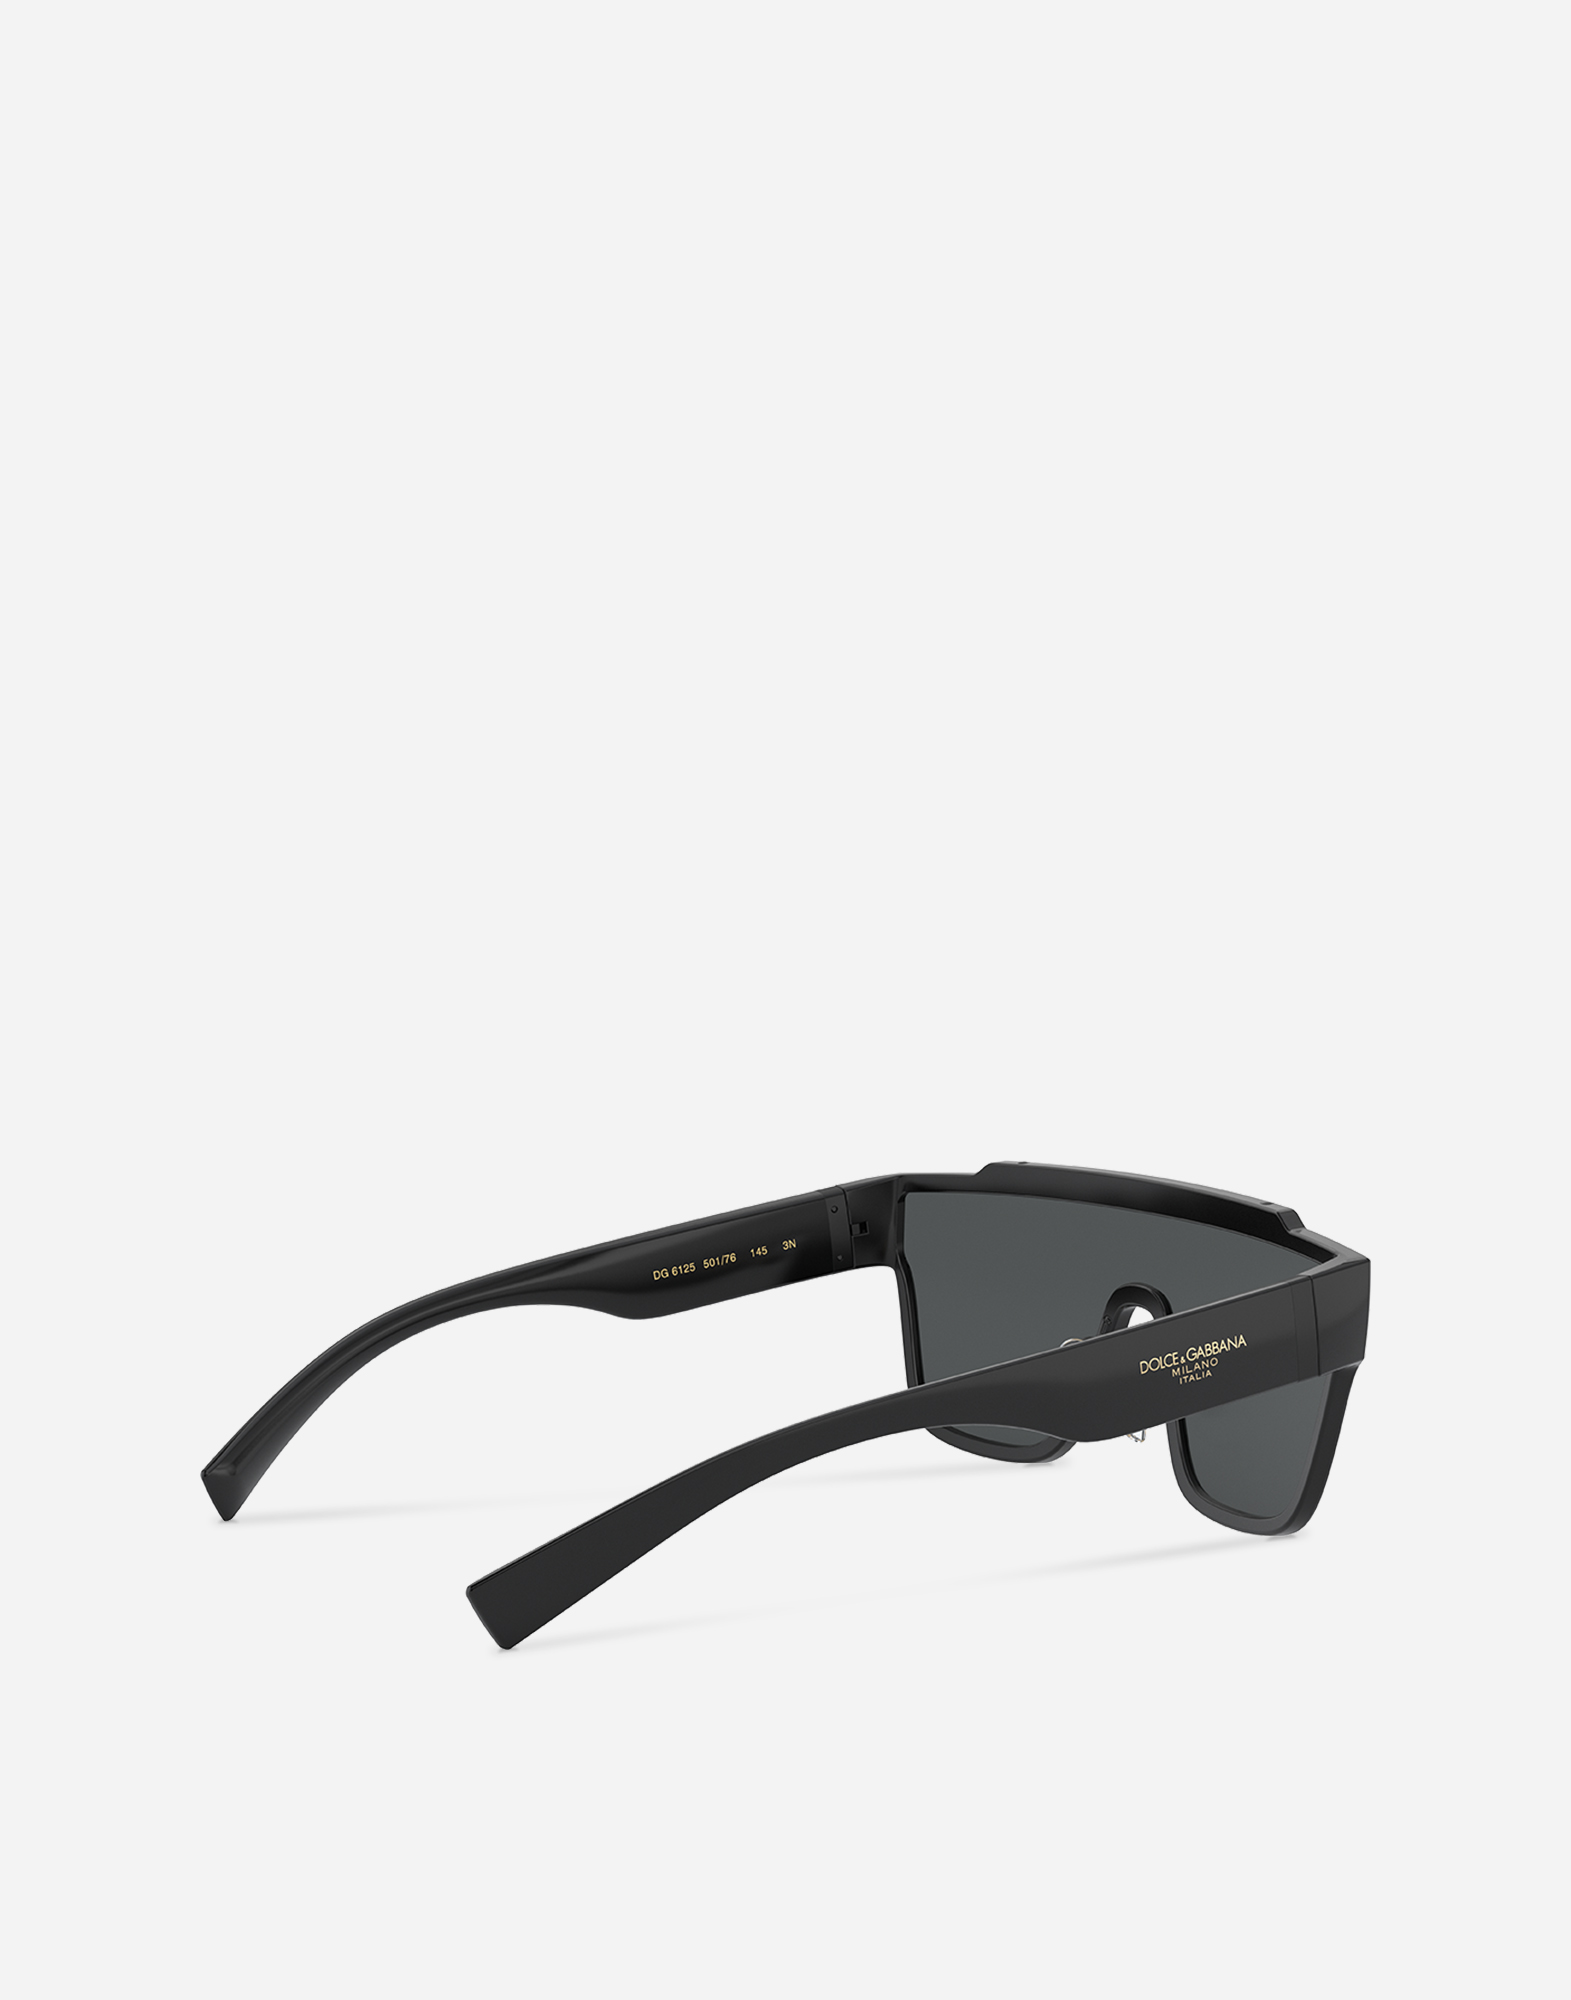 dolce gabbana black sunglasses